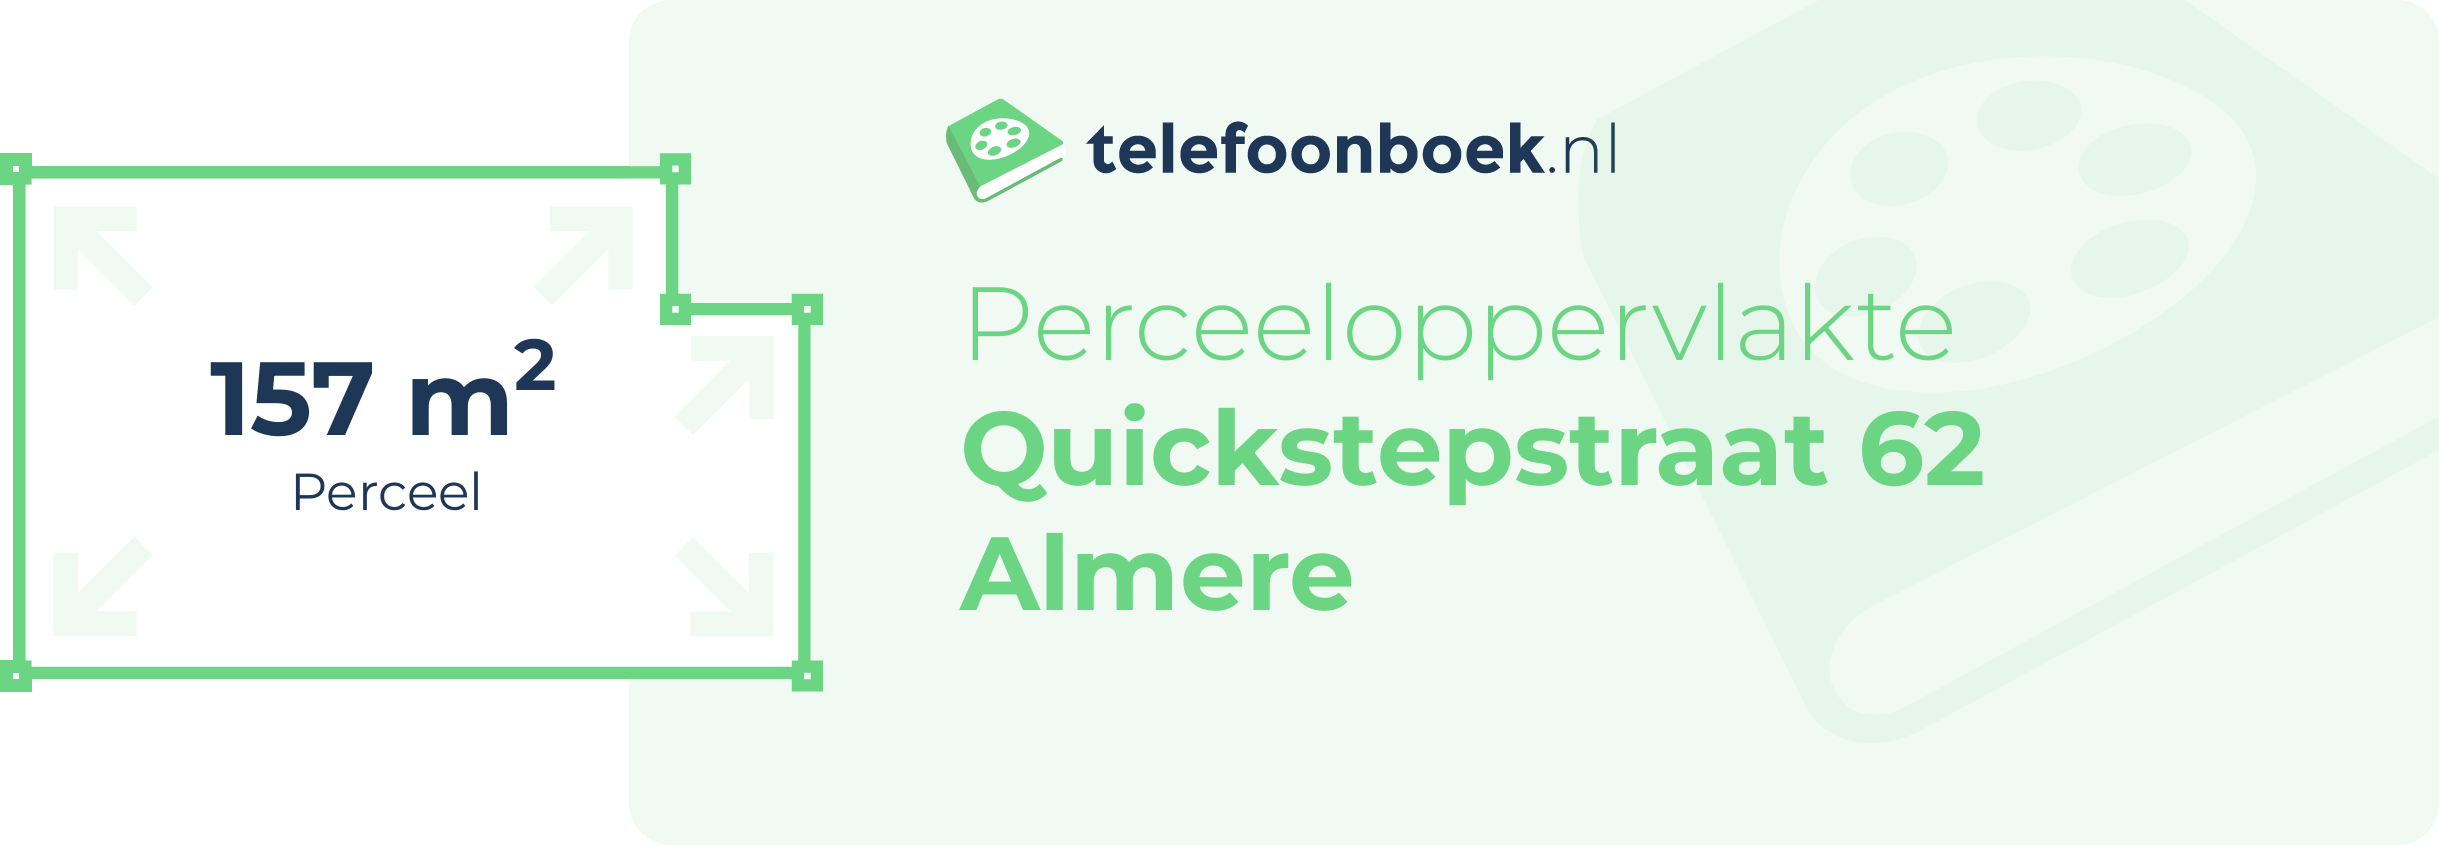 Perceeloppervlakte Quickstepstraat 62 Almere